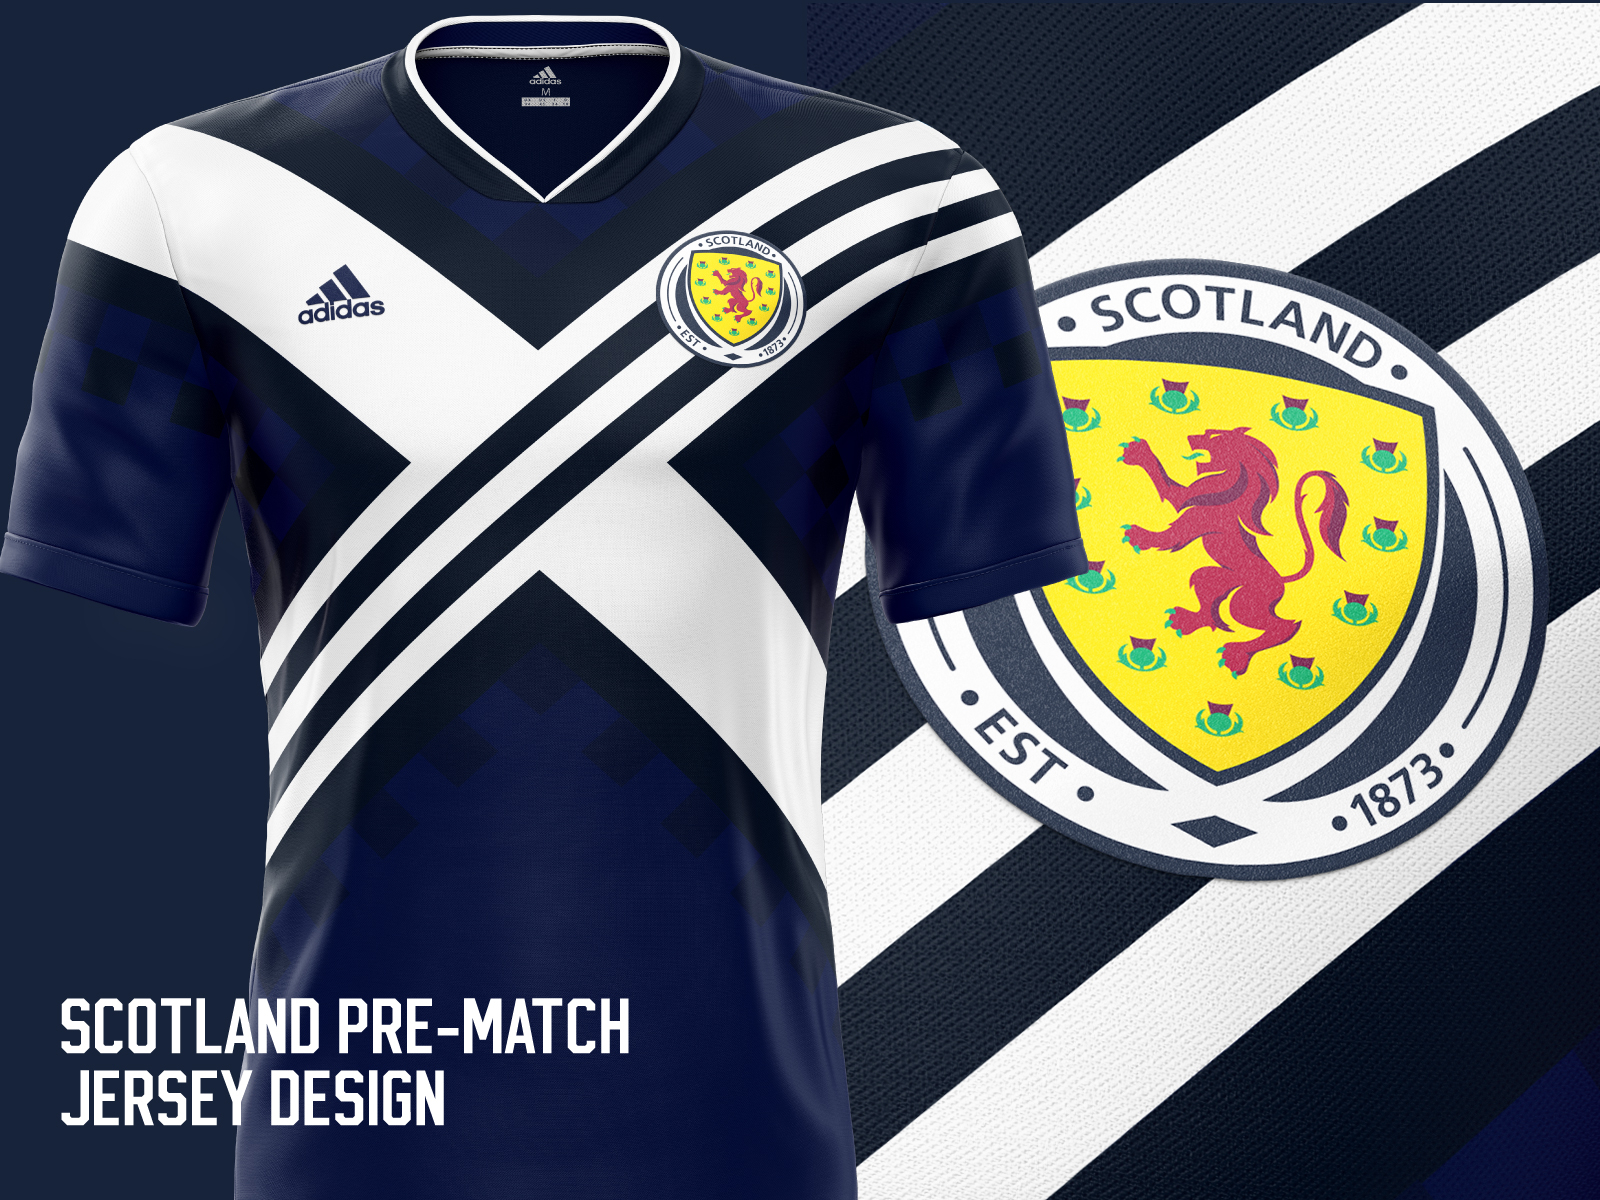 new scotland football kit